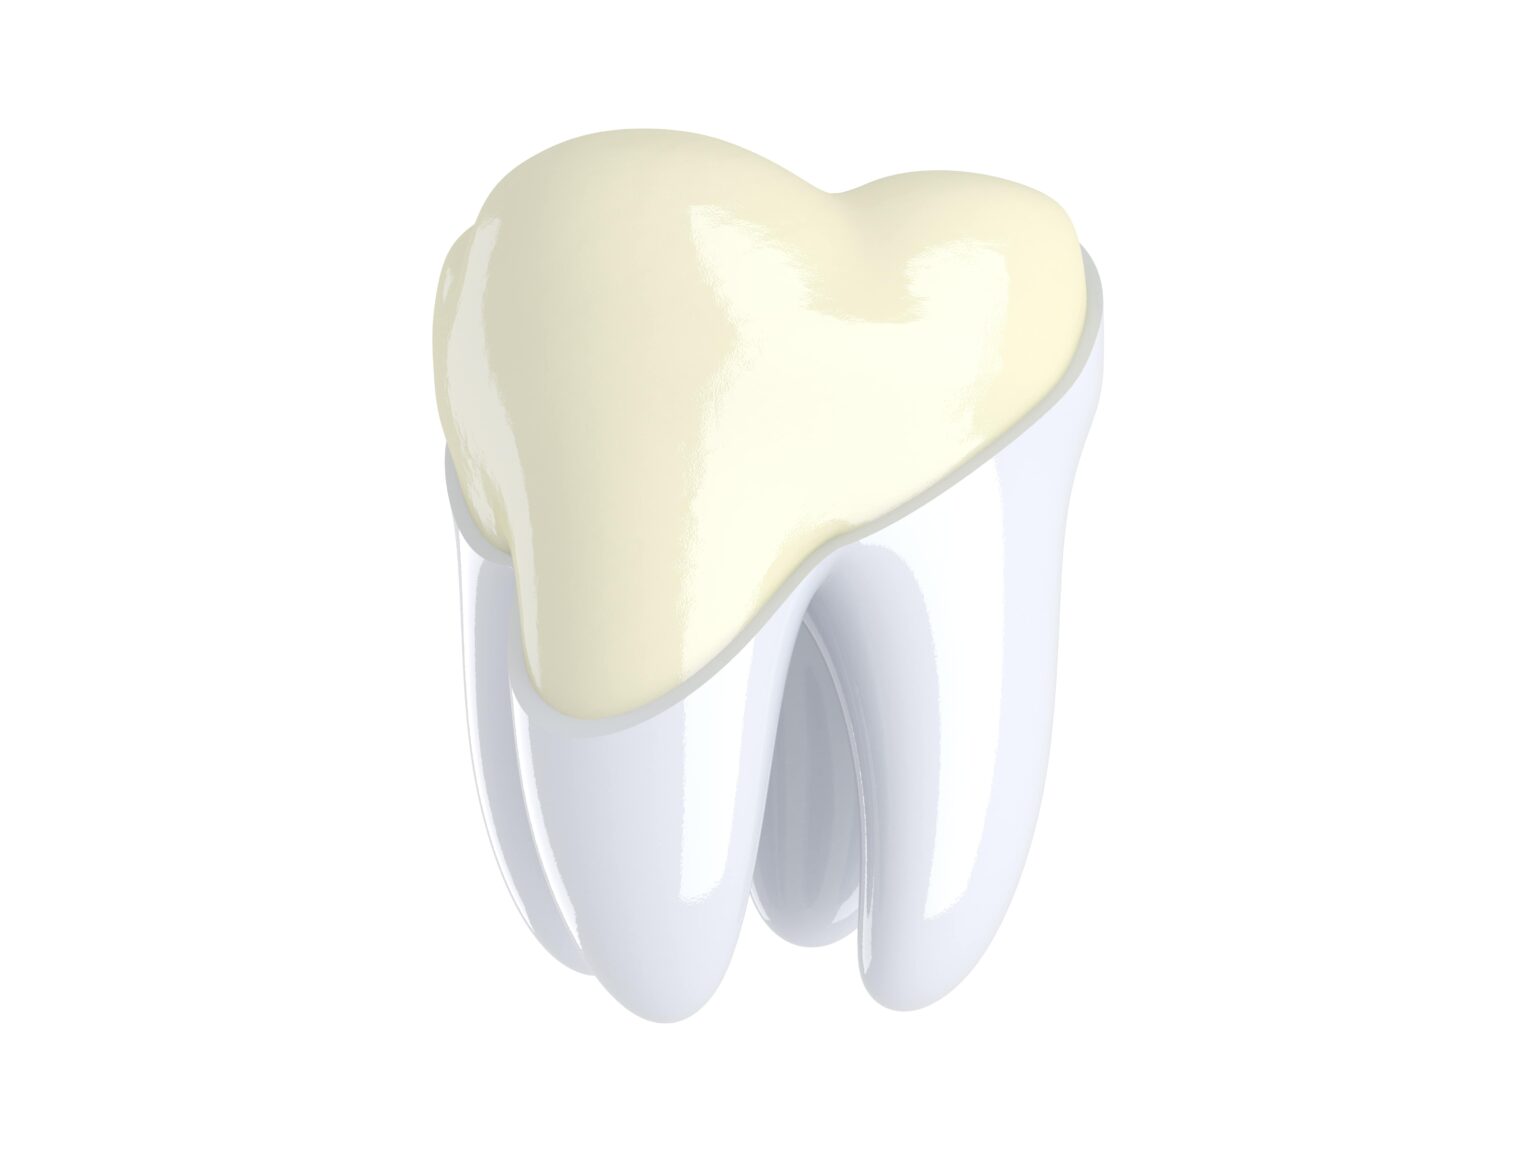 teeth translucent or transparent nutrition